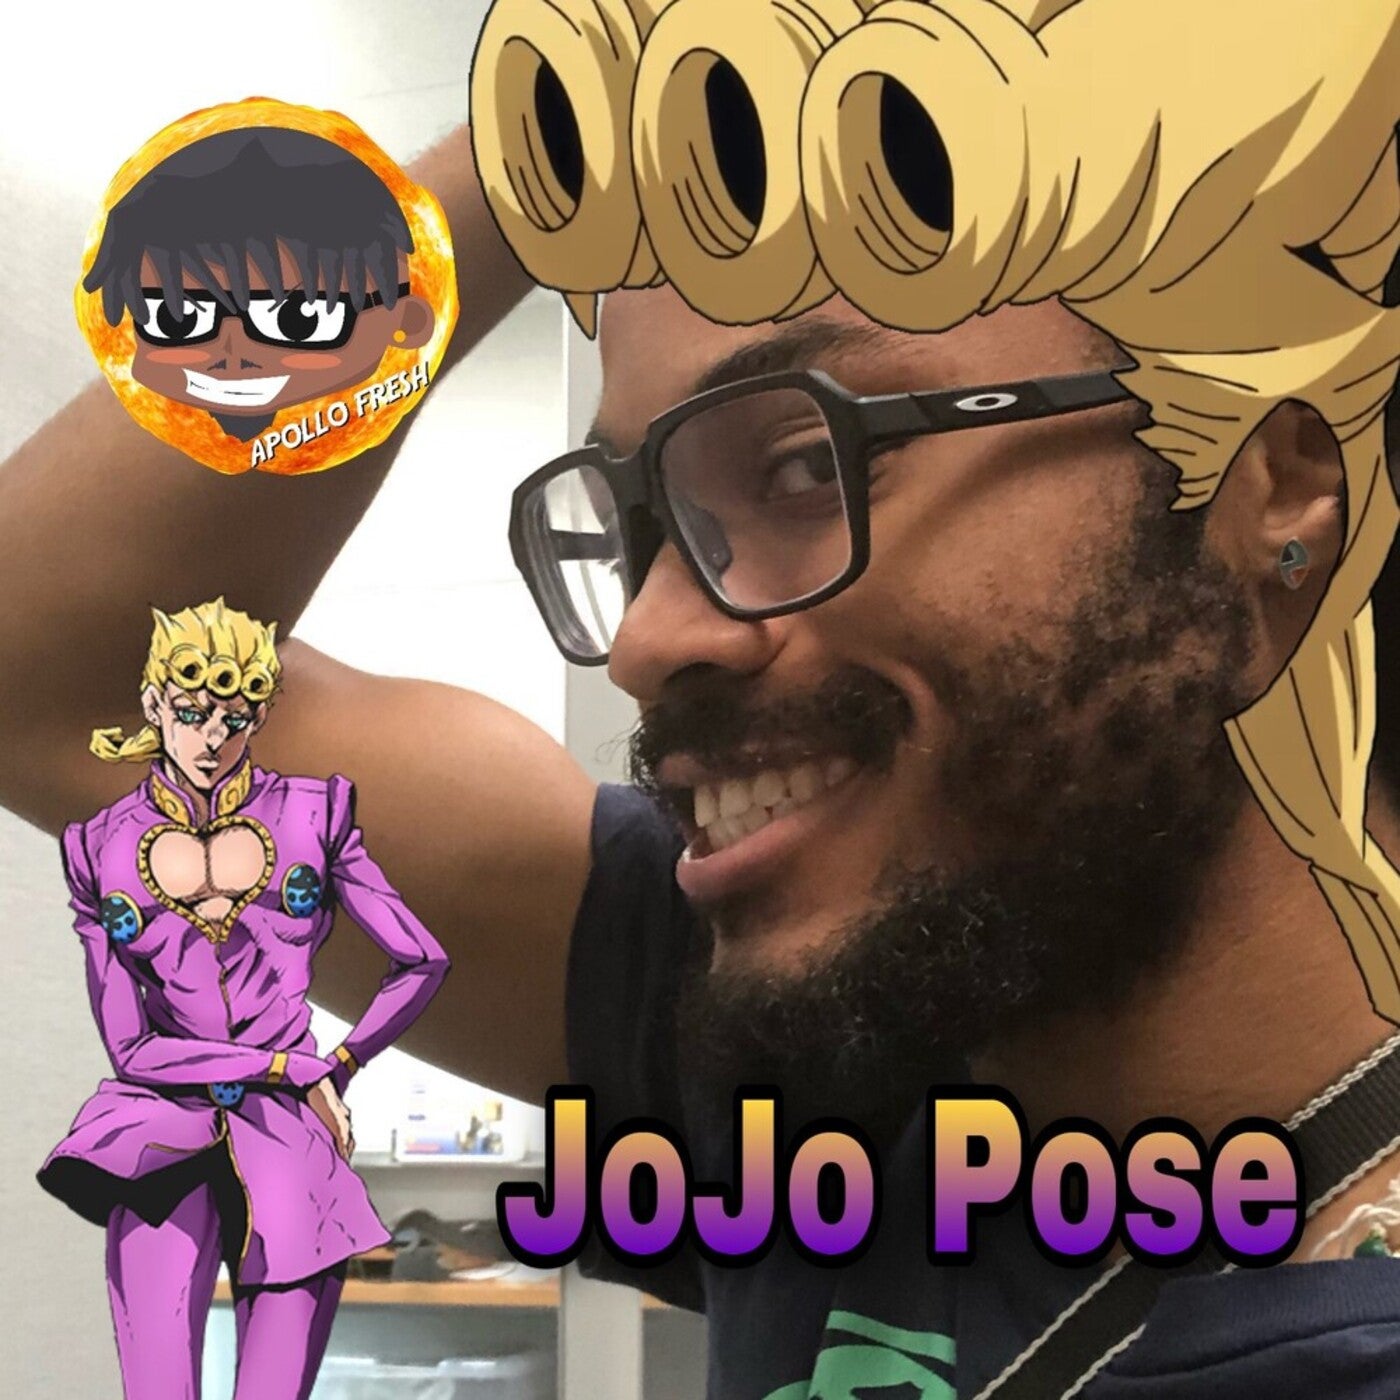 Jojo poses are here!